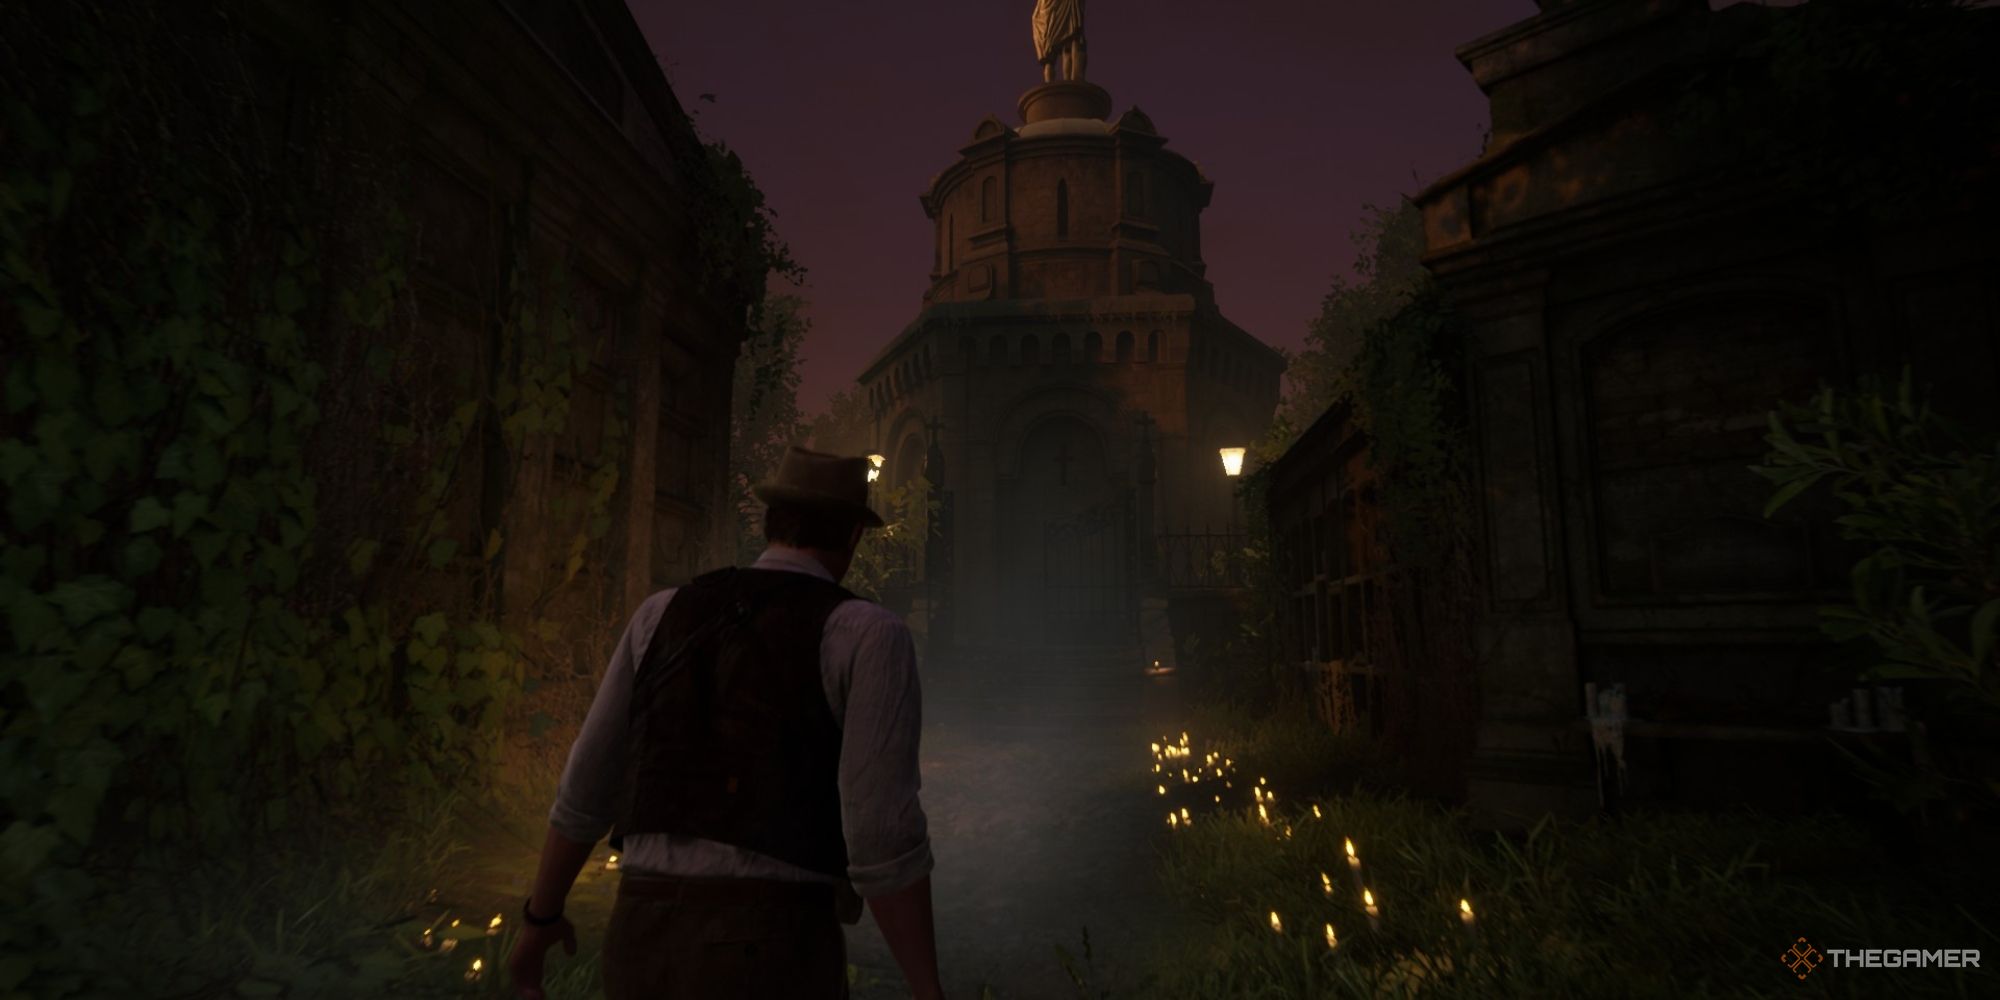 Edward approaching the chapel in the Lafayette Cemetery in Alone in the Dark.